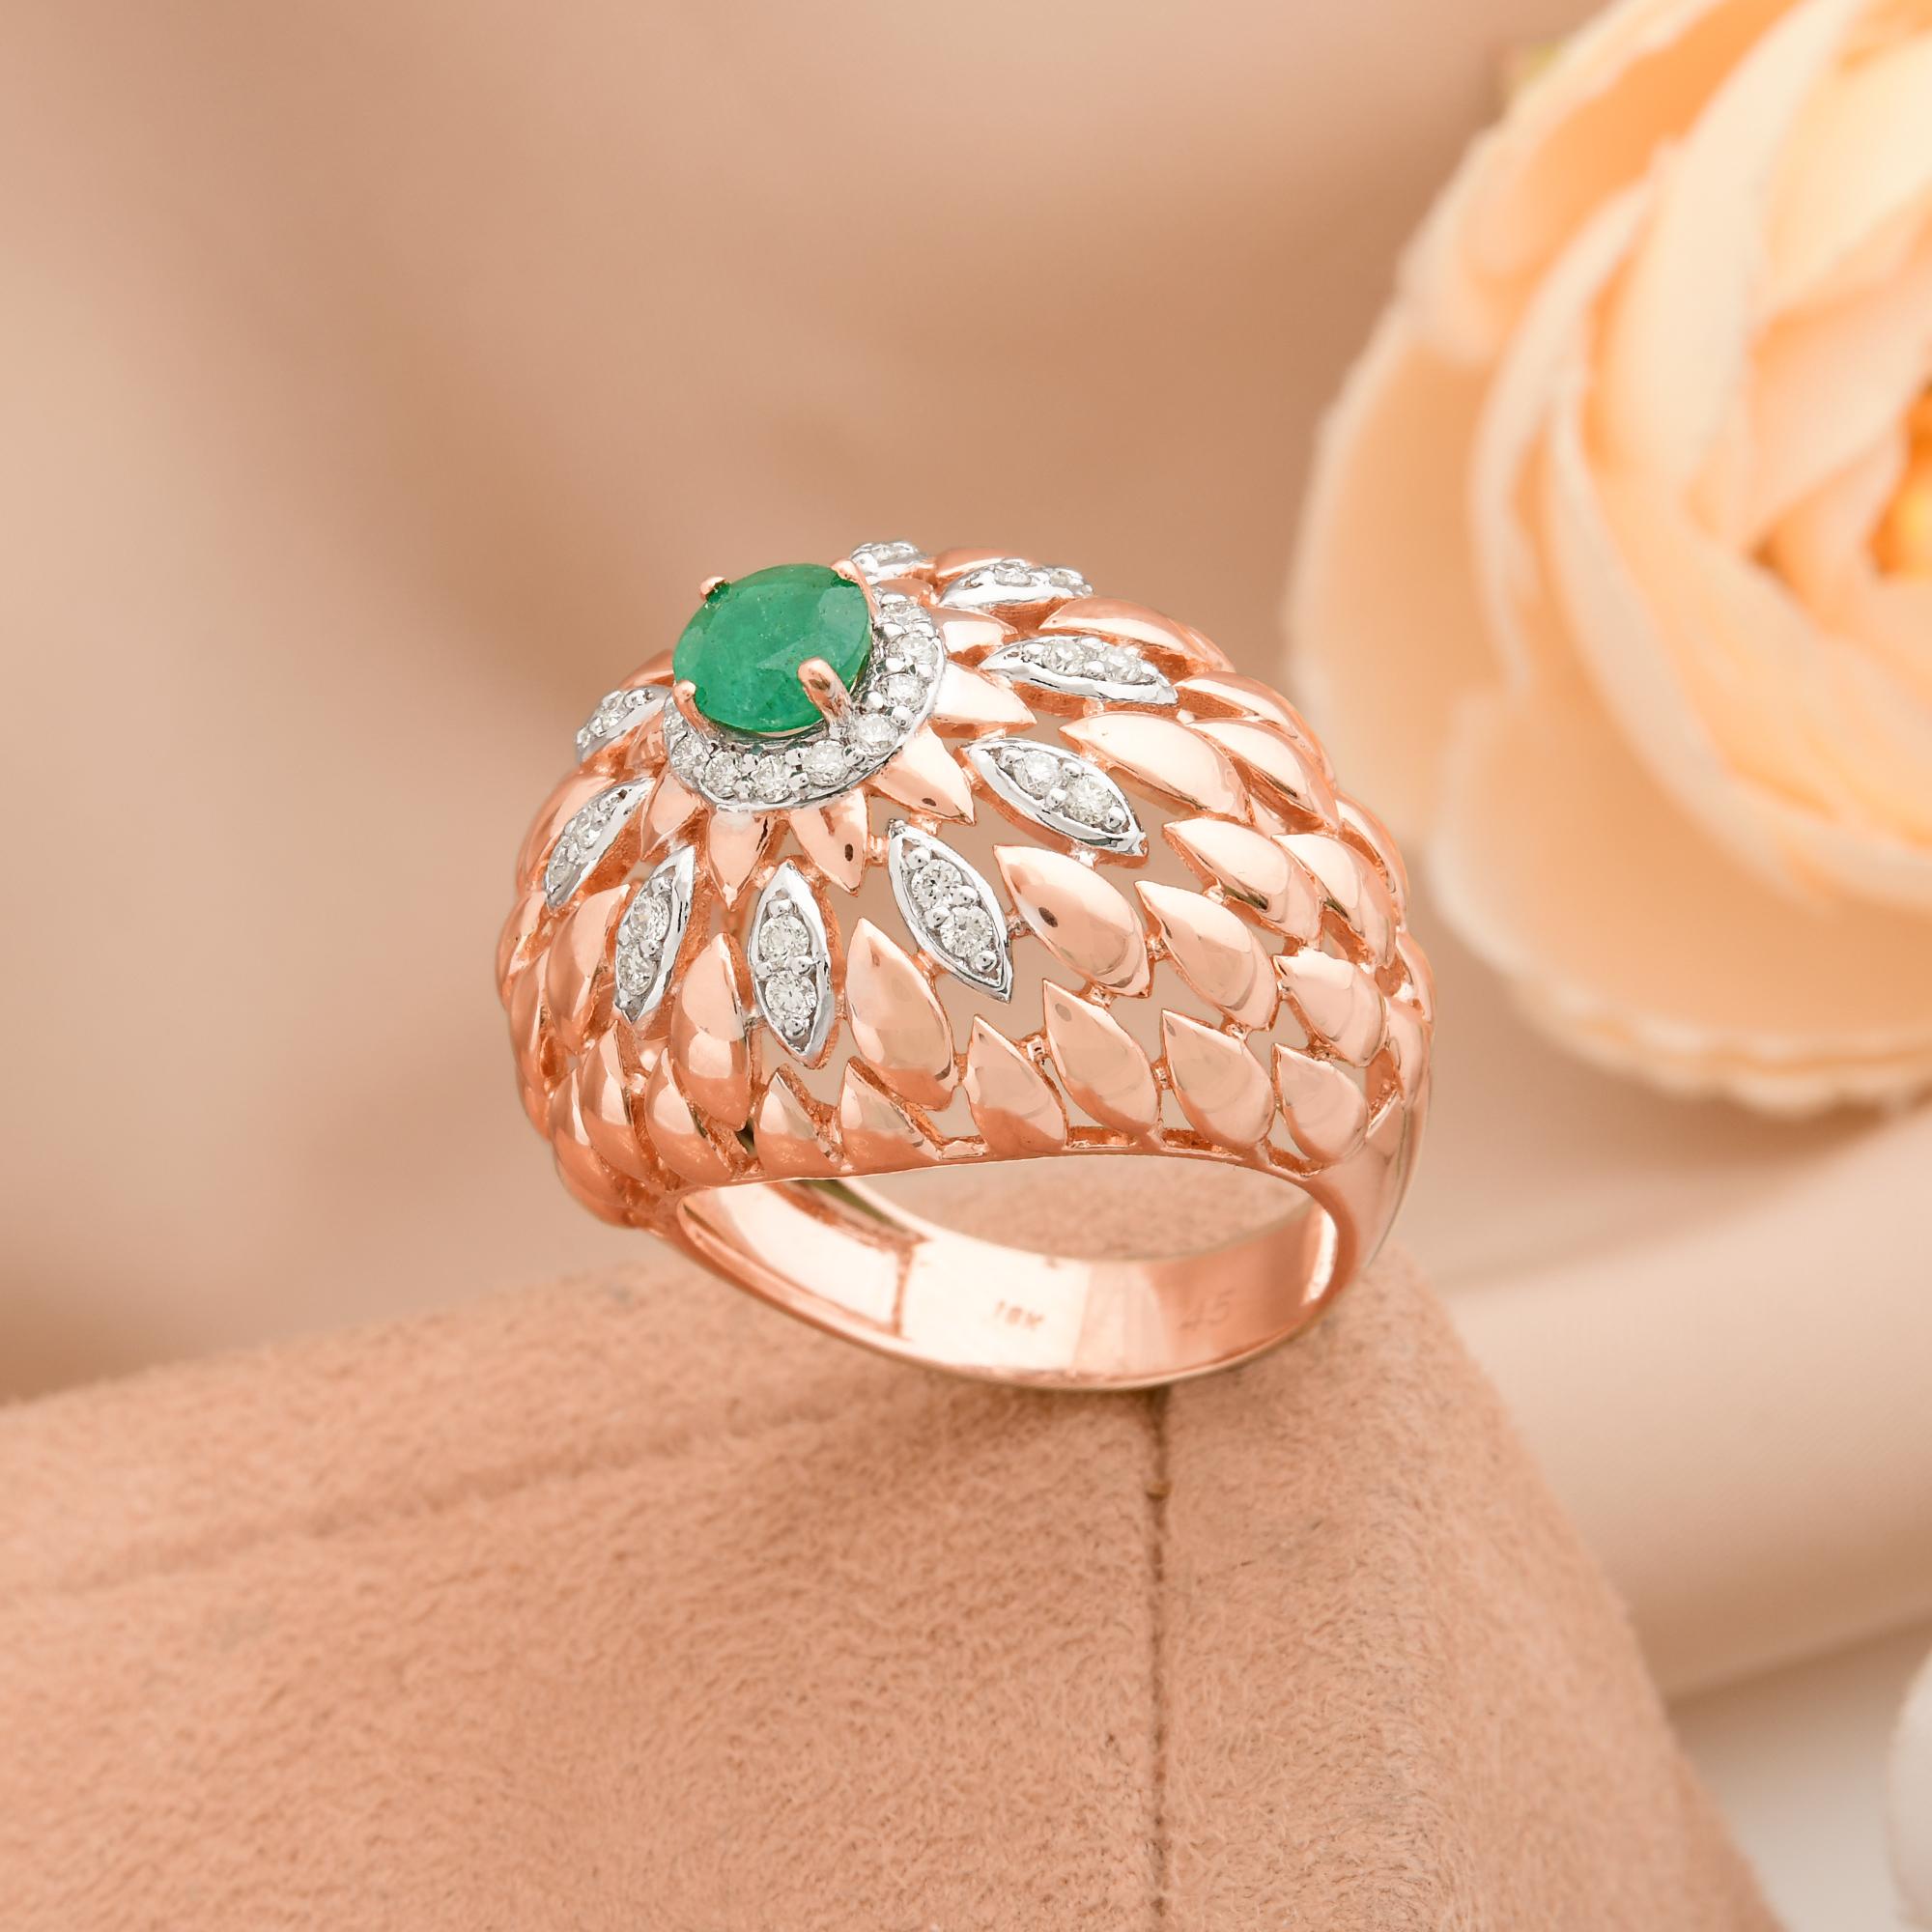 Zambian Emerald Gemstone Dome Ring Diamond Pave Solid 14k Rose Gold Fine Jewelry (bague en forme de dôme en émeraude zambienne, pavé de diamants, or rose massif) Pour femmes en vente